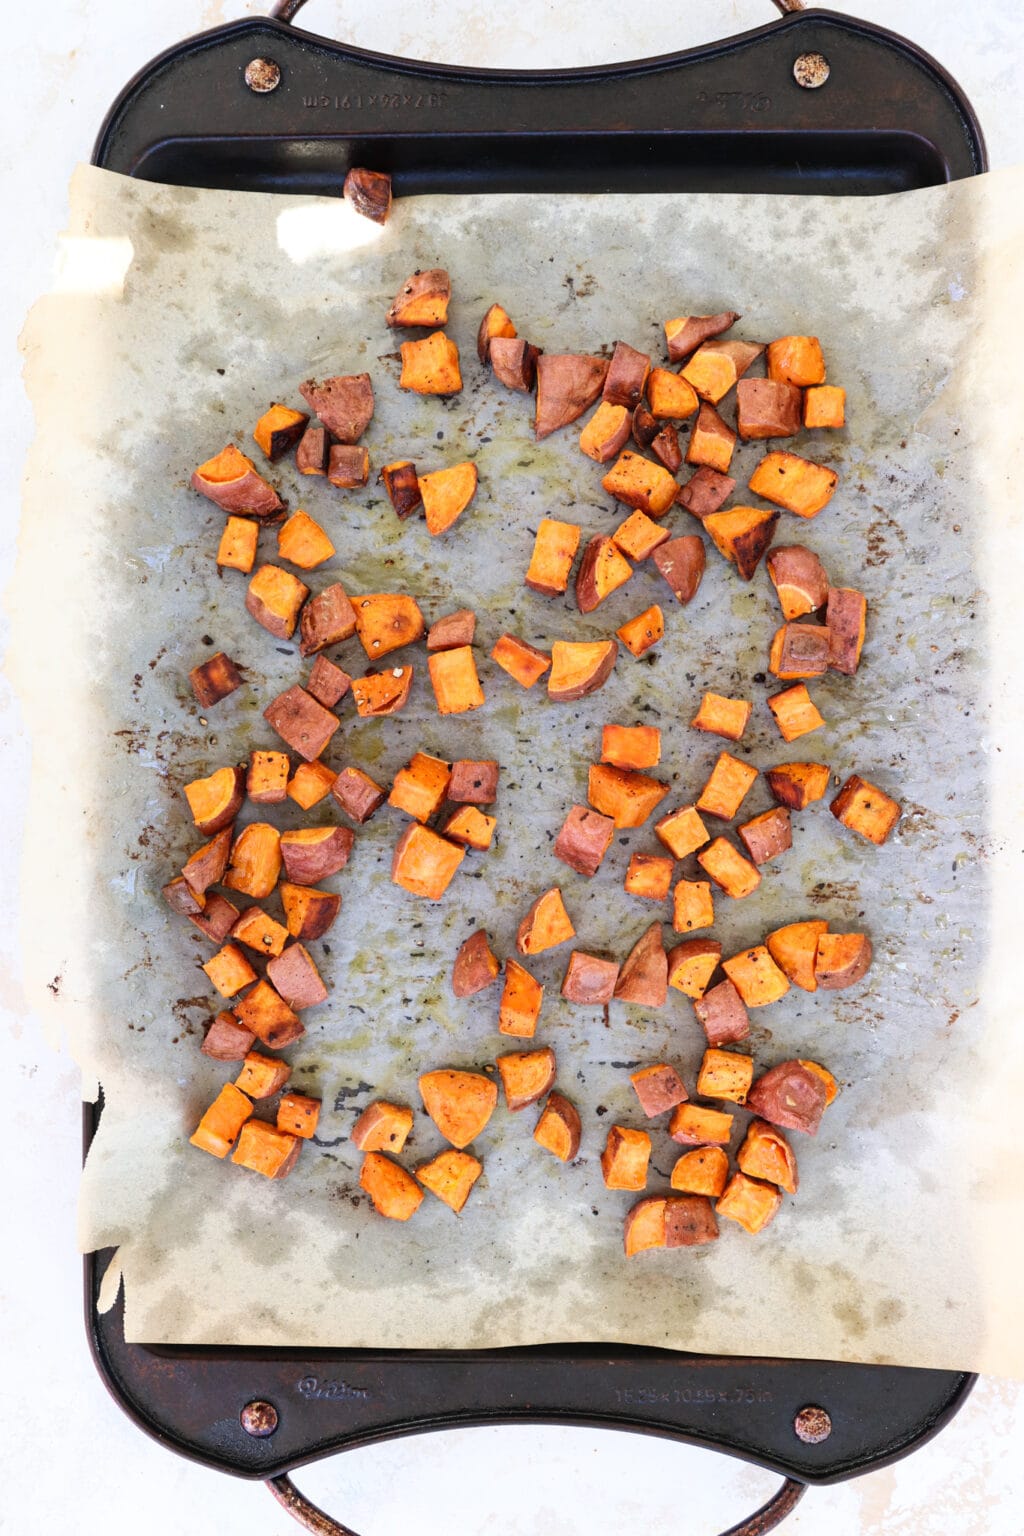 Roasted sweet potatoes on a baking sheet